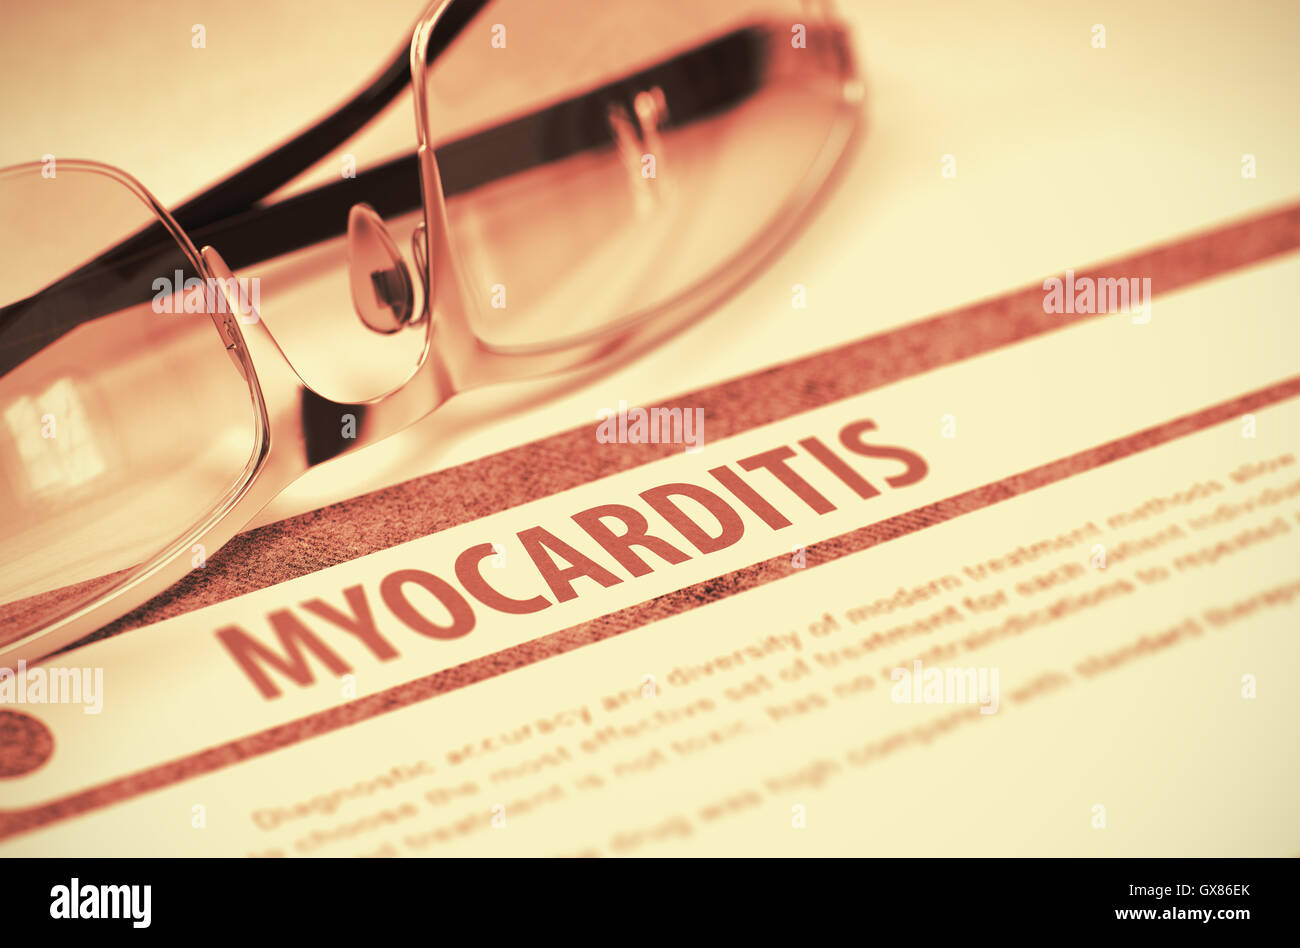 Diagnosis - Myocarditis. Medicine Concept. 3D Illustration. Stock Photo